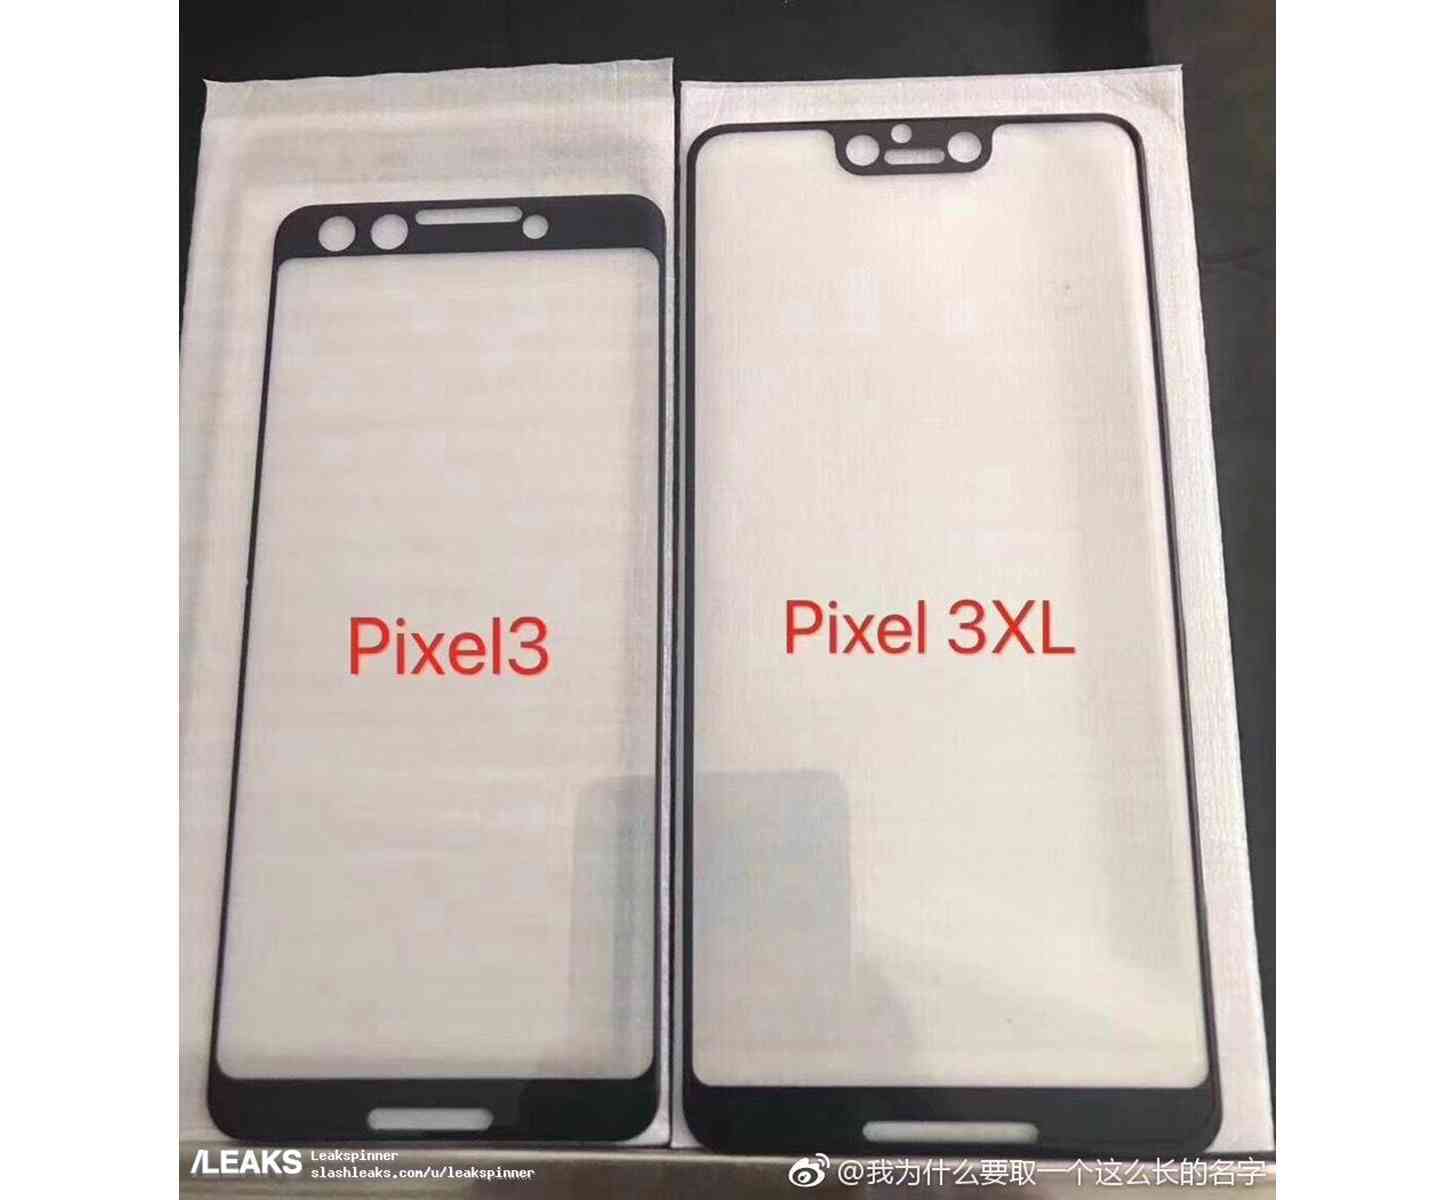 Google Pixel 3 XL screen protector leak